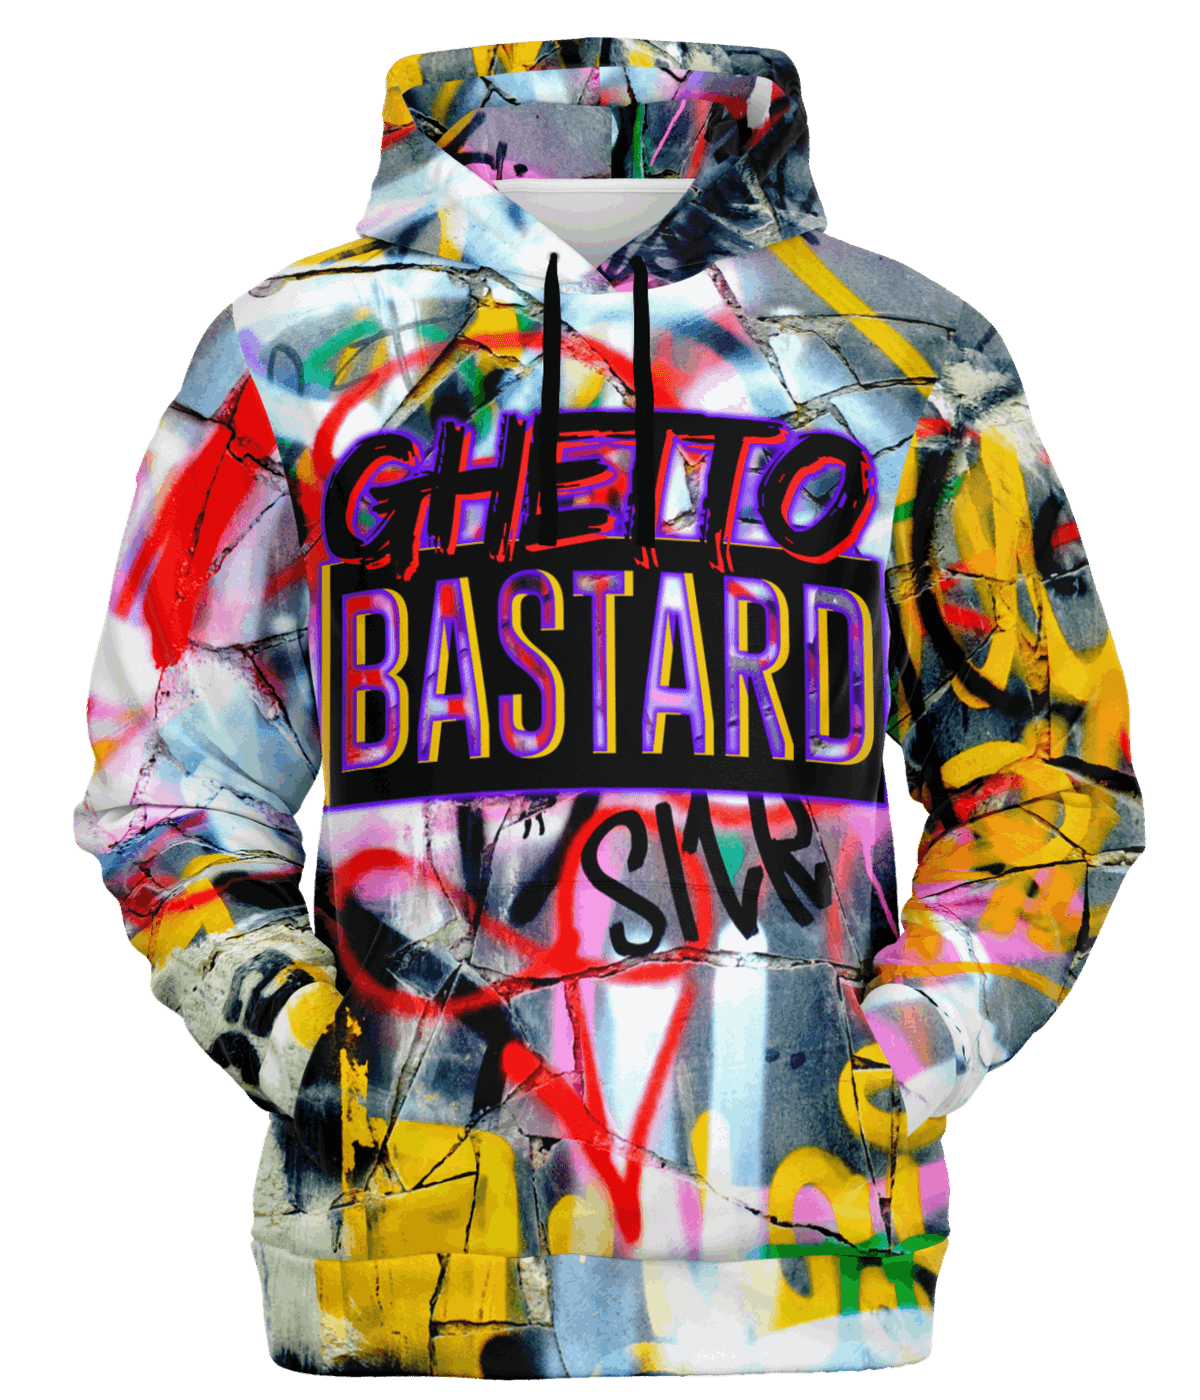 Ghetto Bastard Graffiti Hoodie front facing